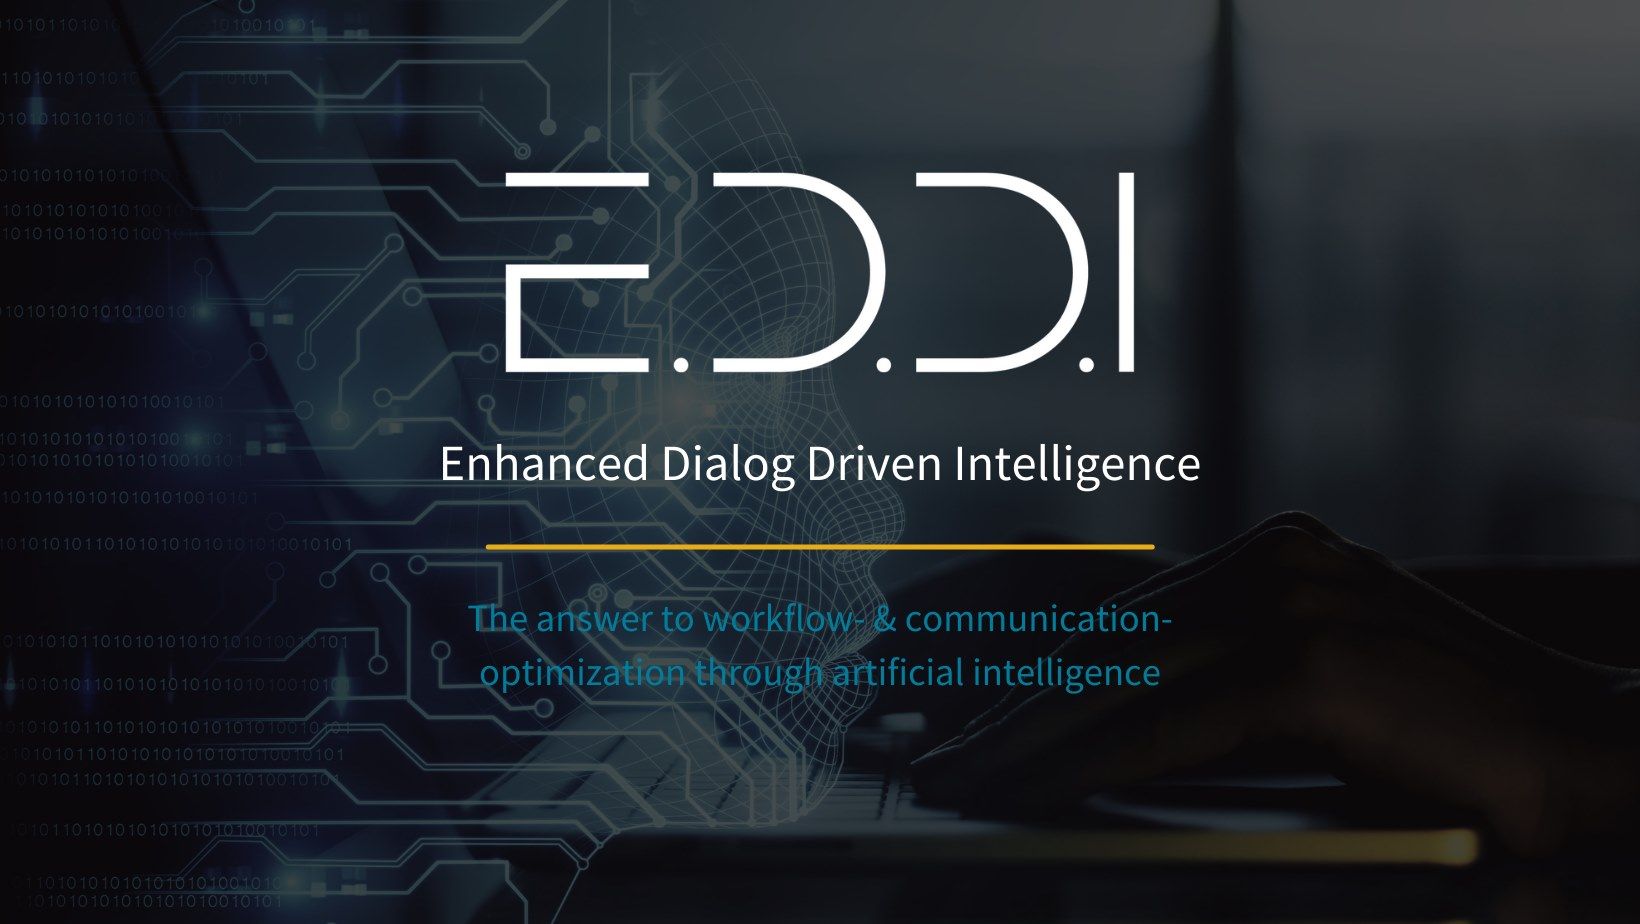 EDDI is an open source chatbot platform for developer